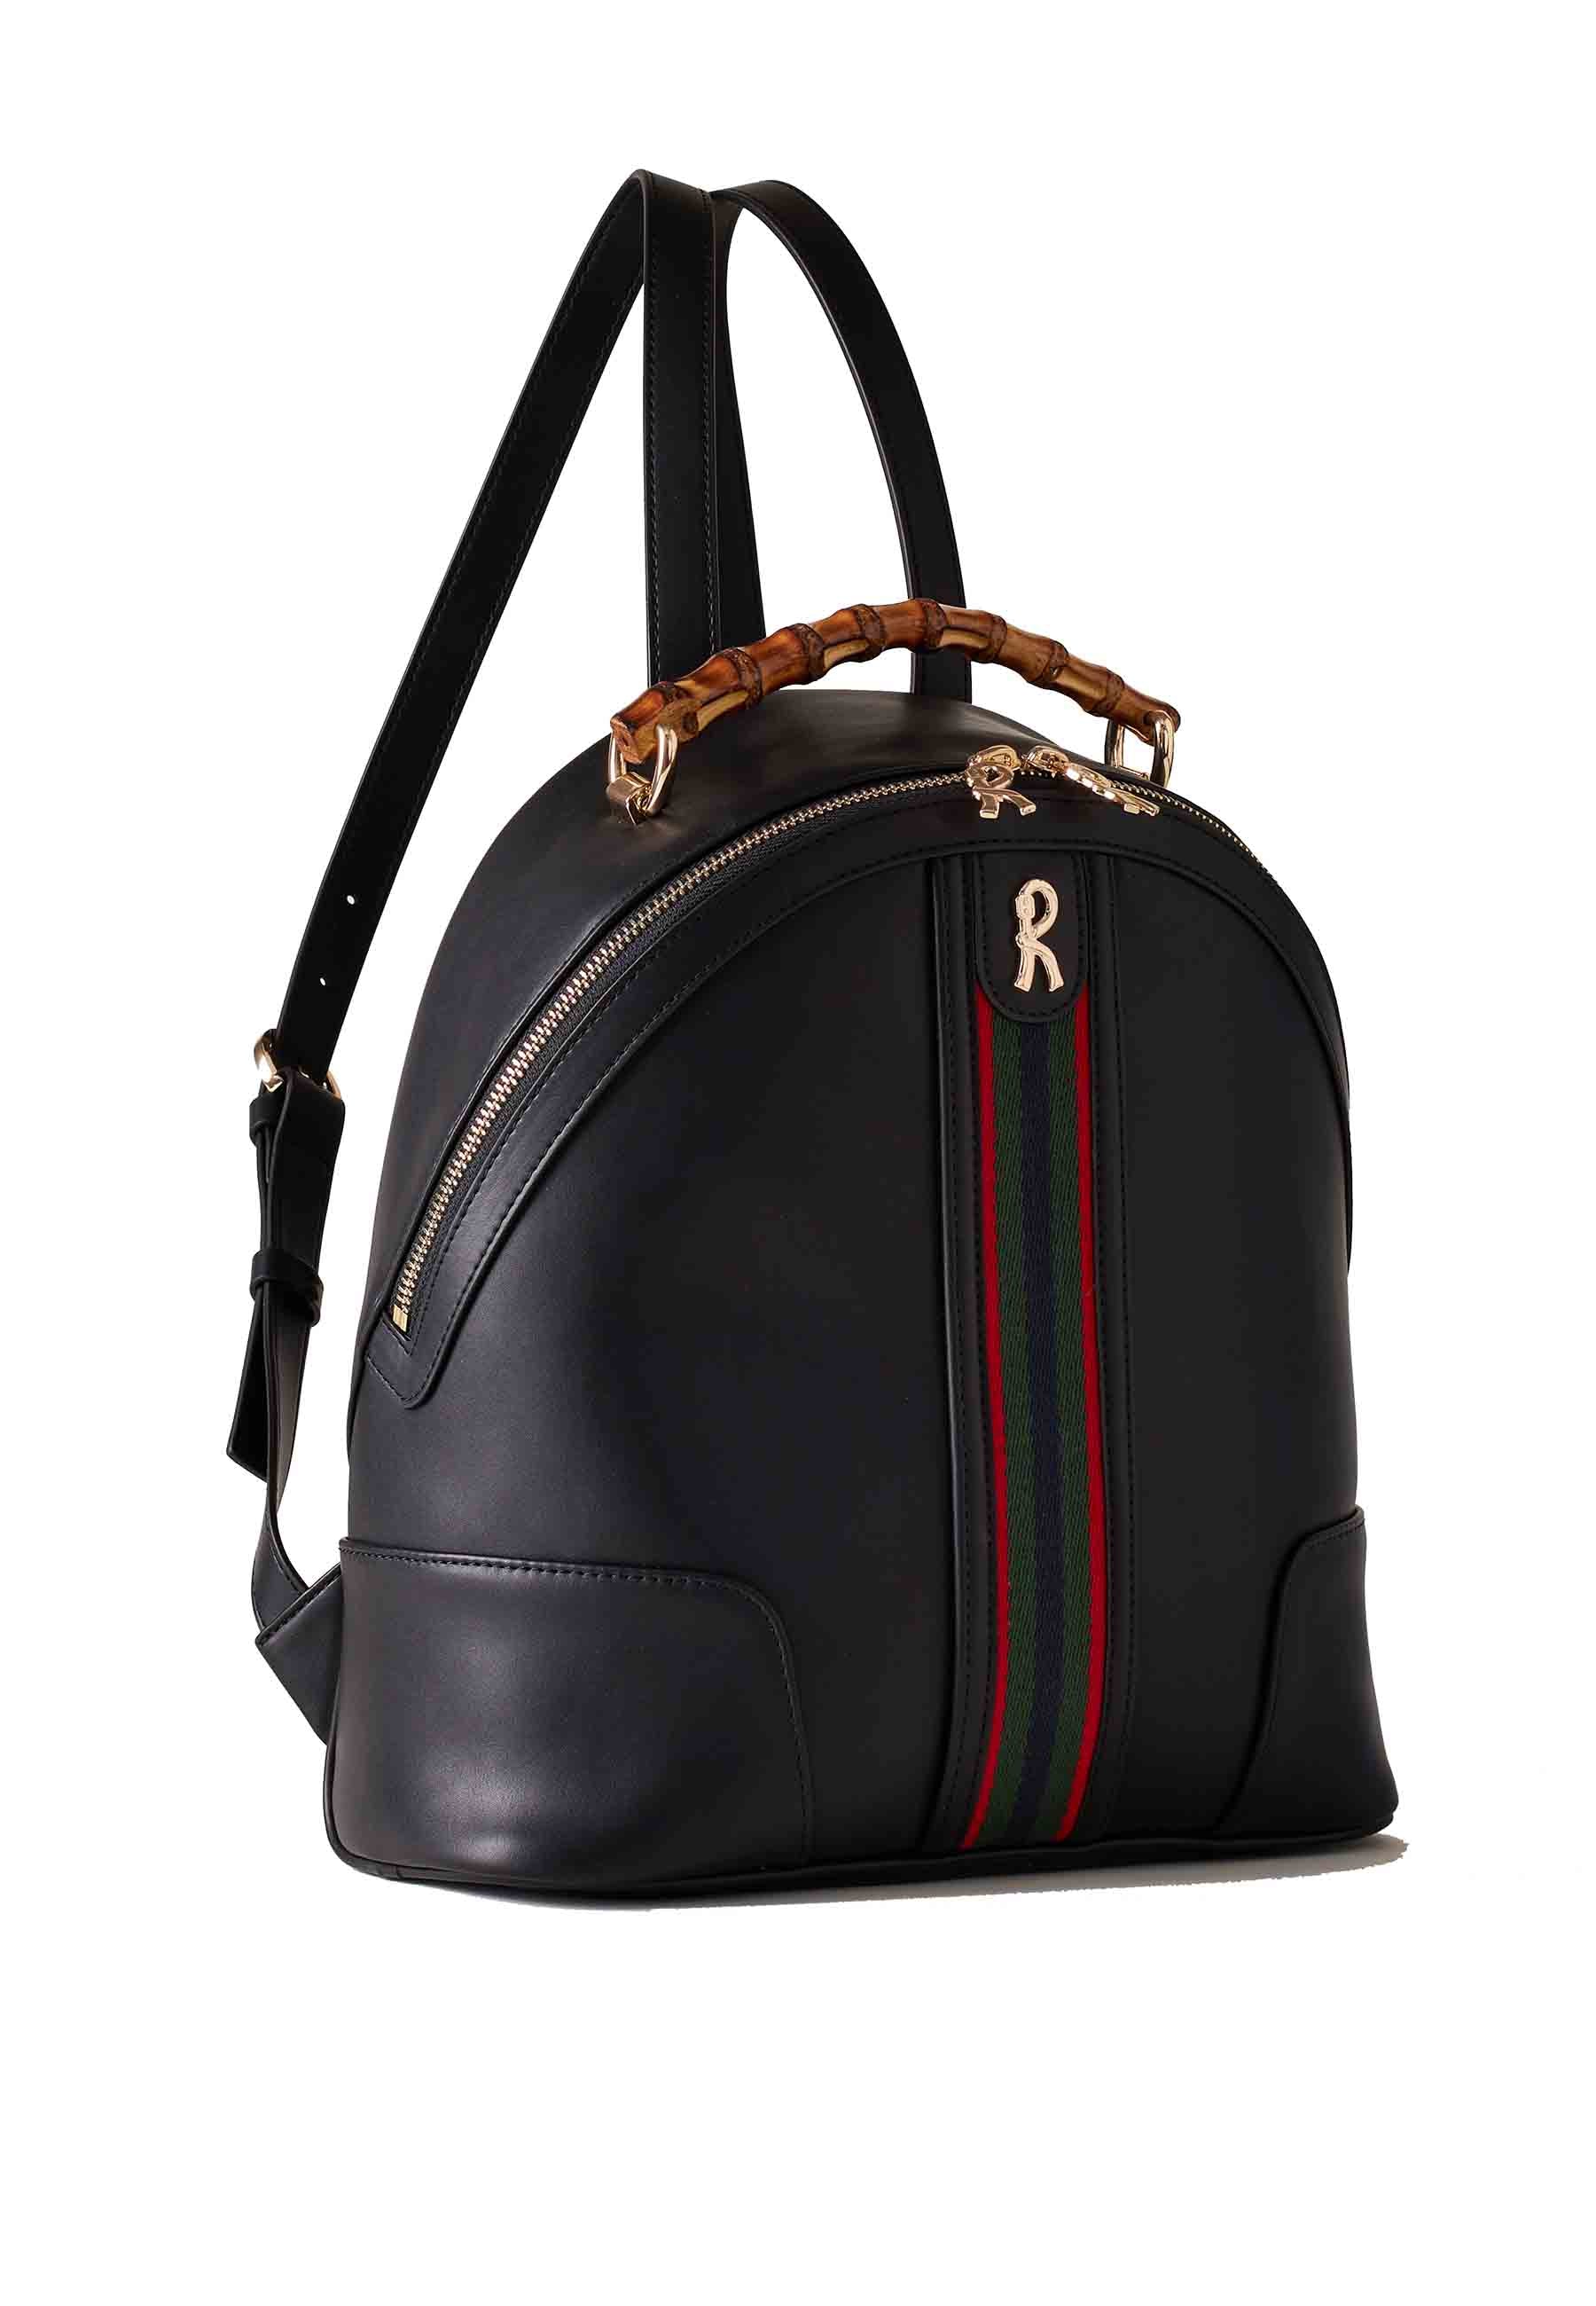 Women's backpack in black eco leather with adjustable shoulder straps